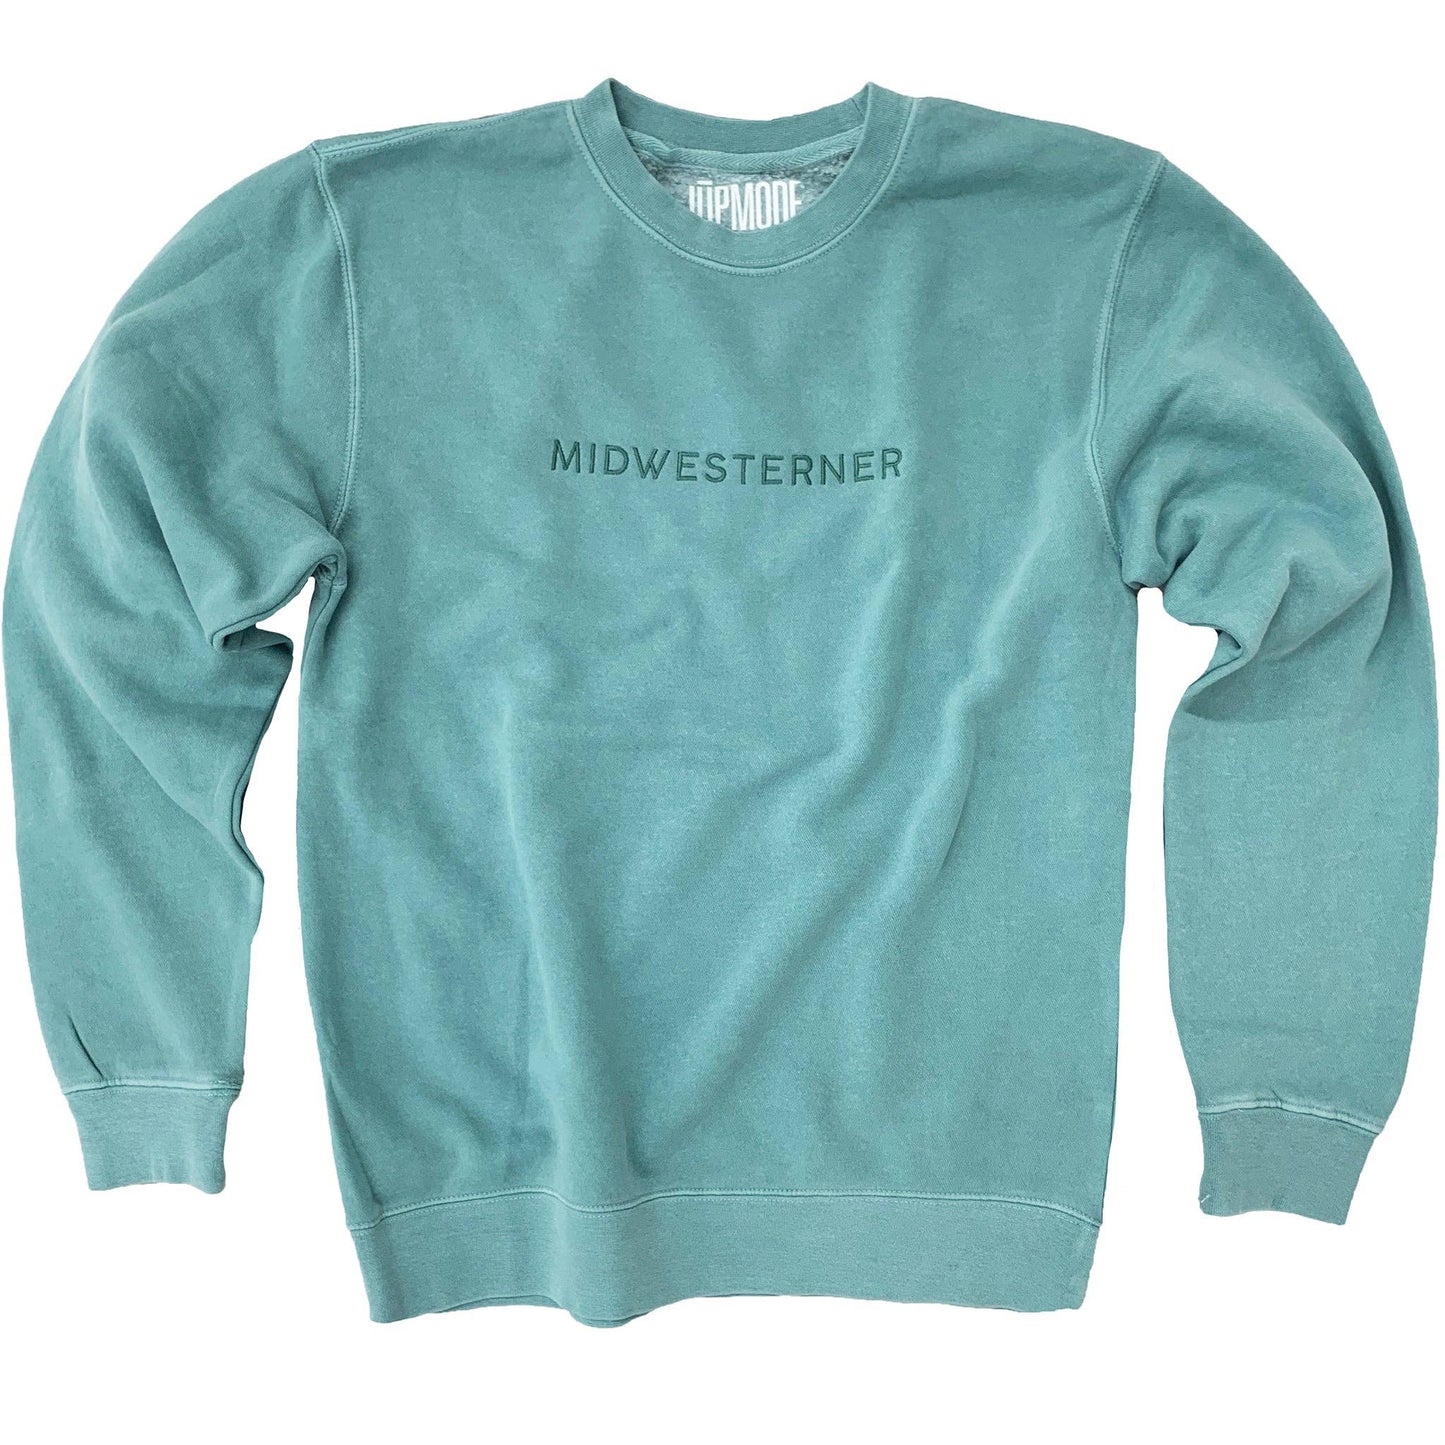 Midwesterner Embroidered Sweatshirt